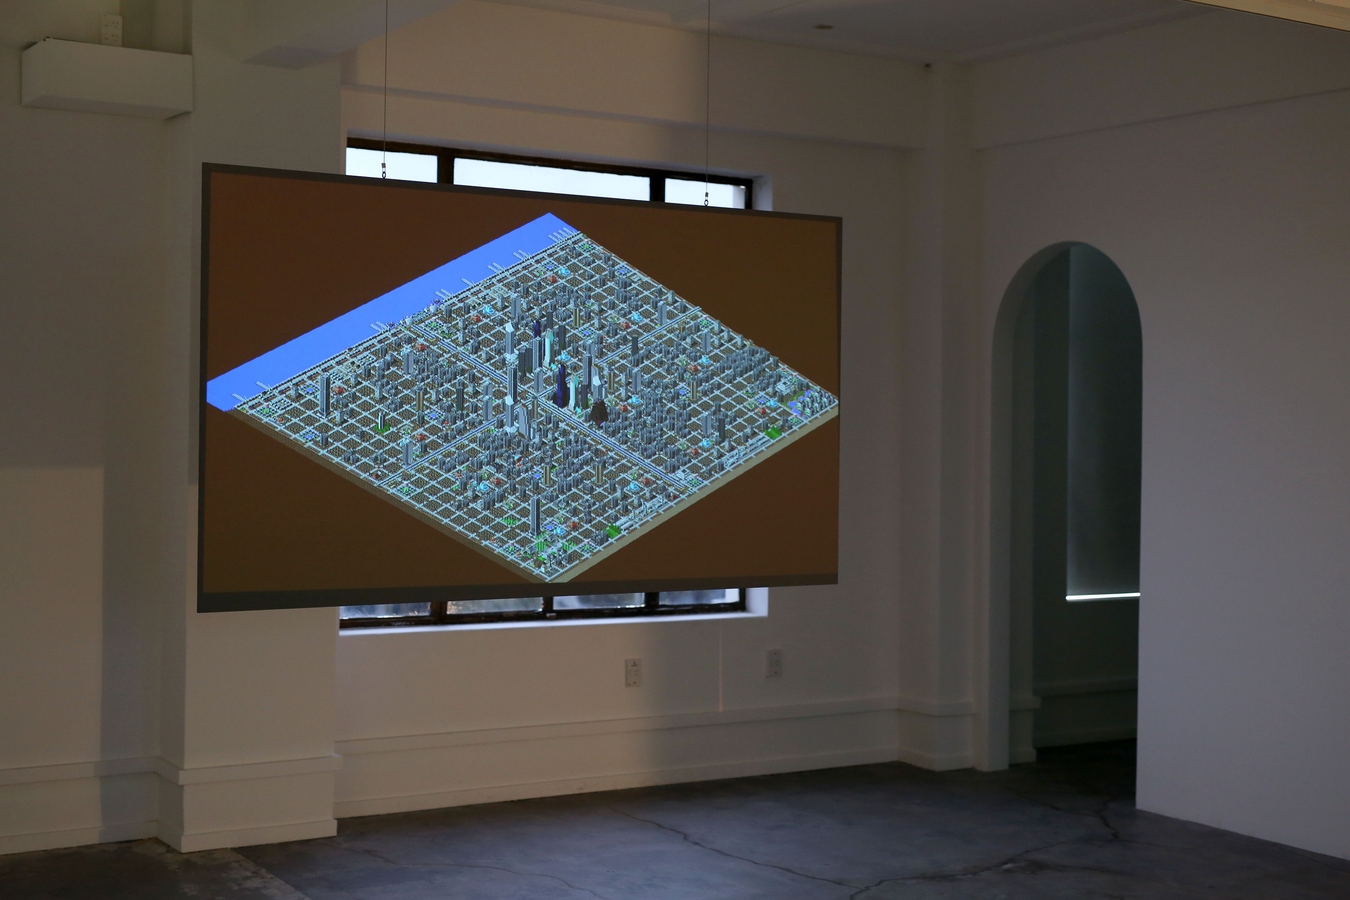 Simulation – Depression, recorded digital simulation, 2012. Image: Daegan Wells